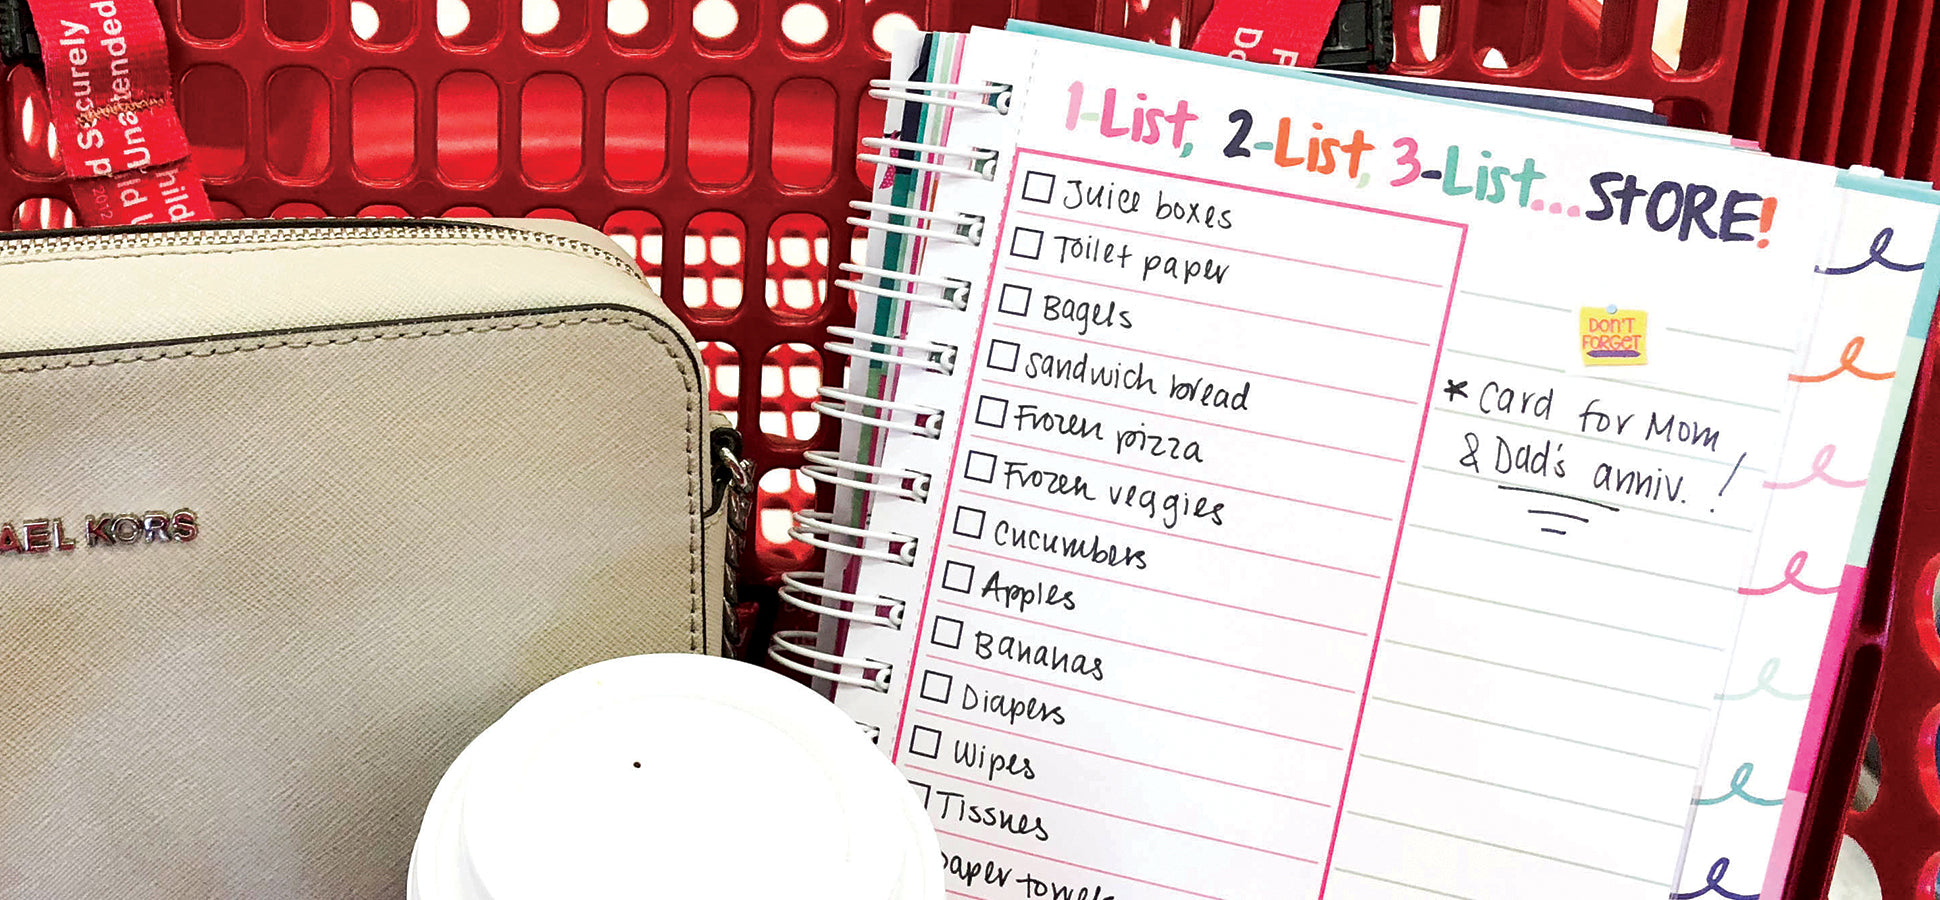 reminder binder list page grocery shopping checklist